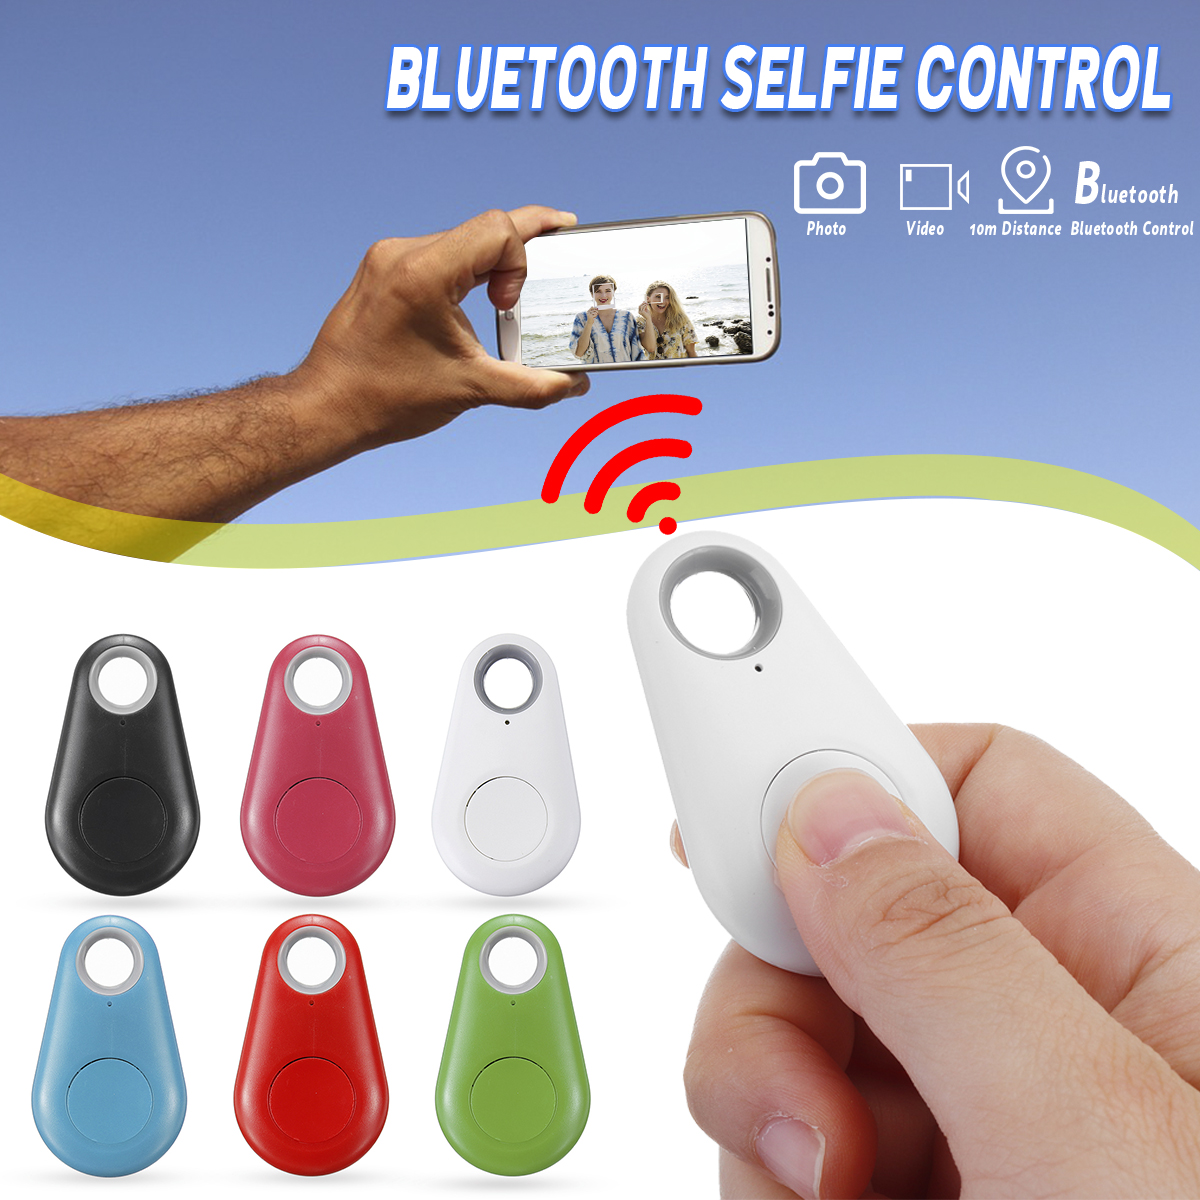 Universal-Portable-Mini-Wireless-bluetooth-Selfie-Control-Self-timer-Remote-Controller-1535089-1